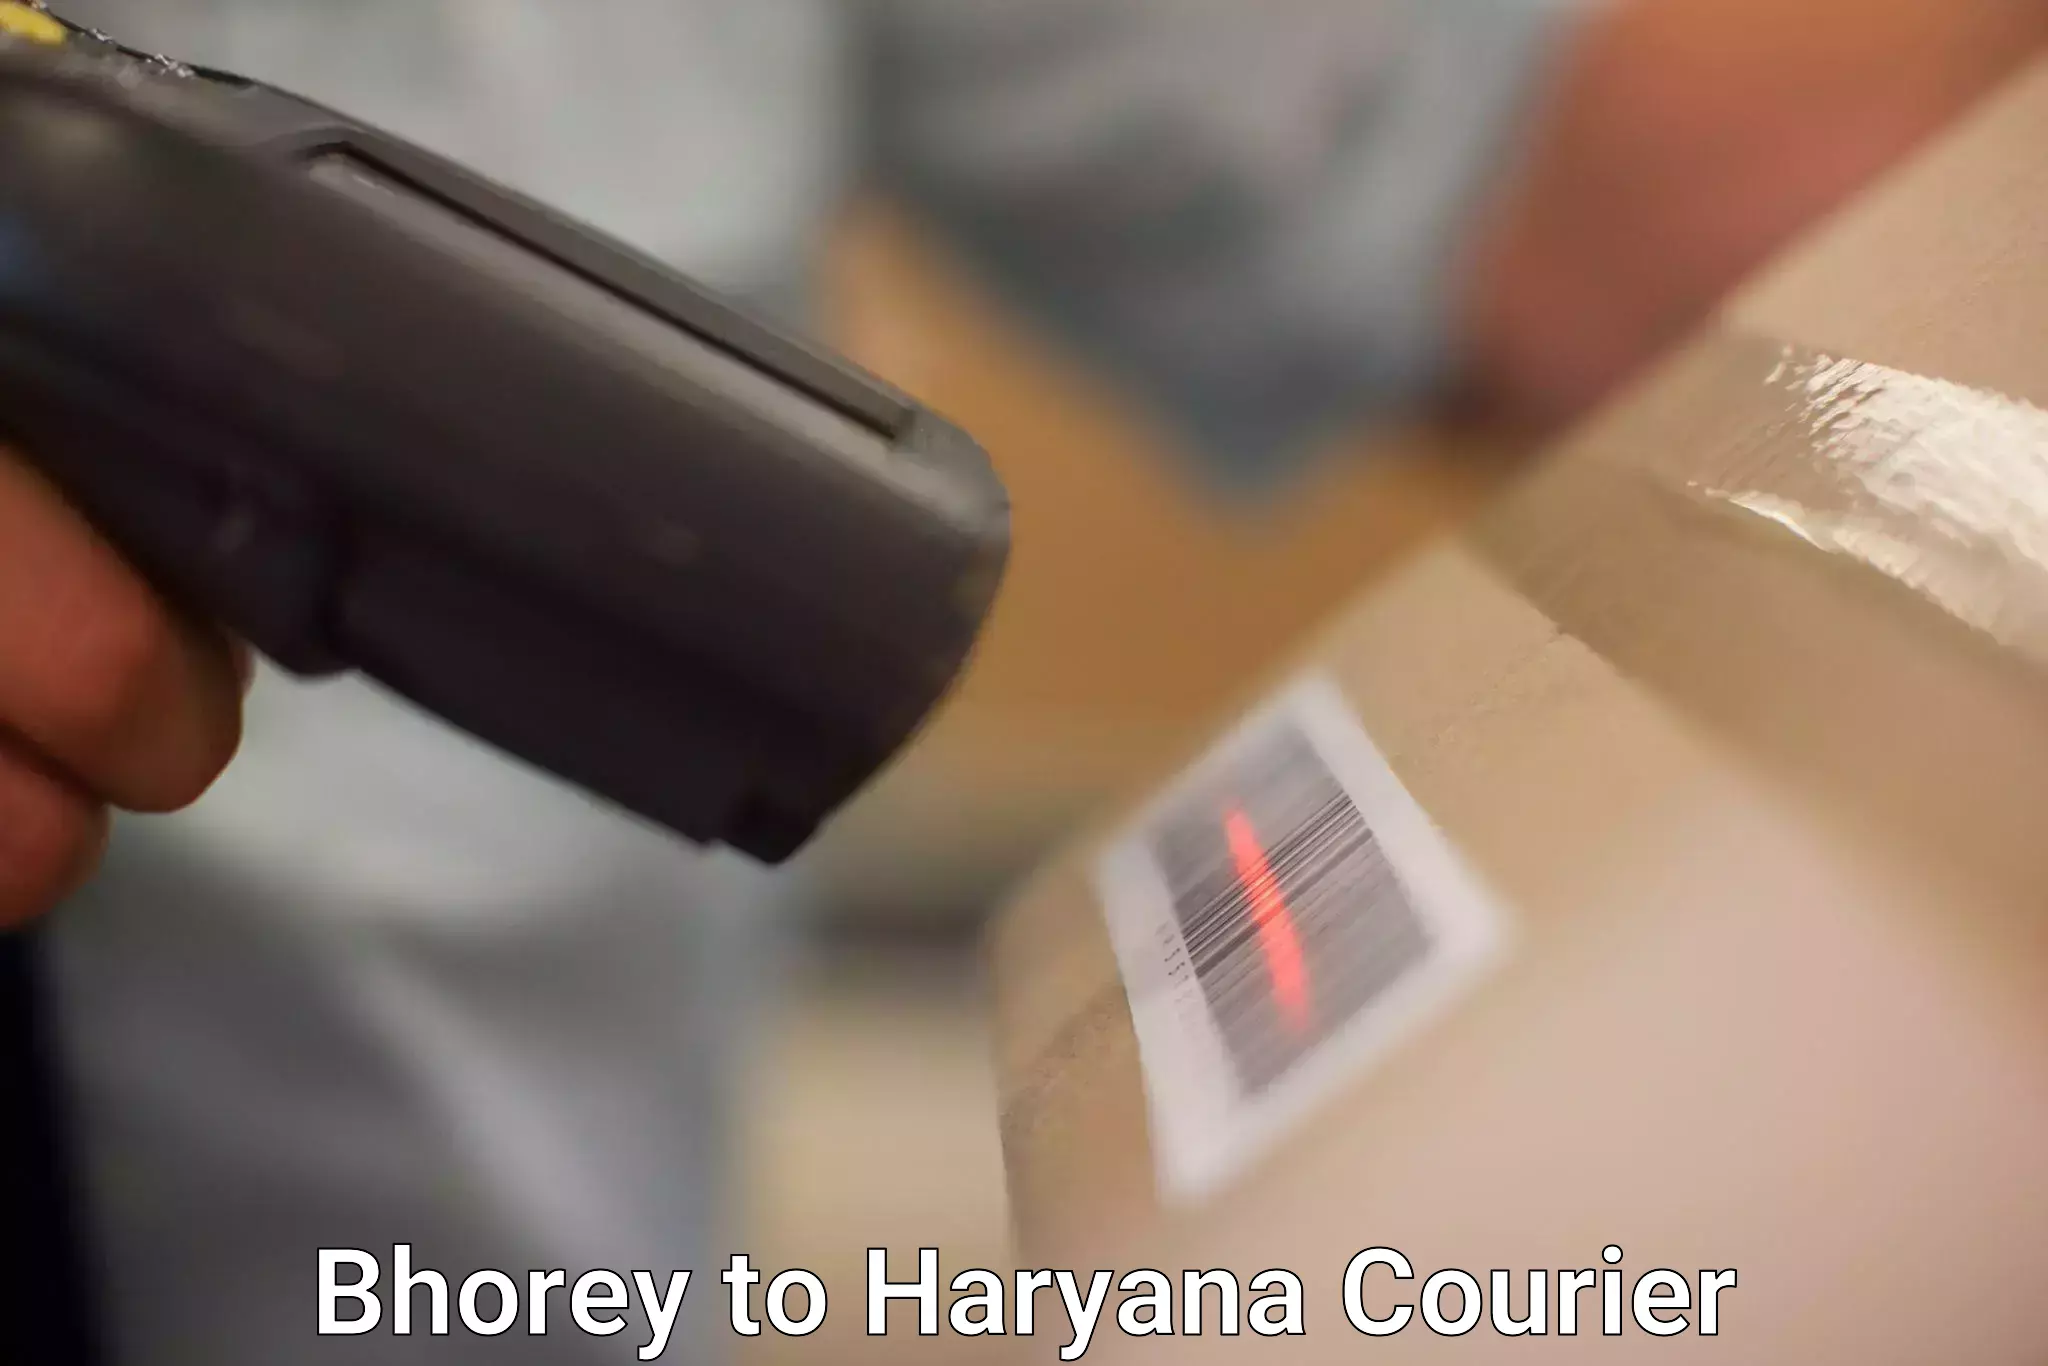 Courier service efficiency in Bhorey to Rewari